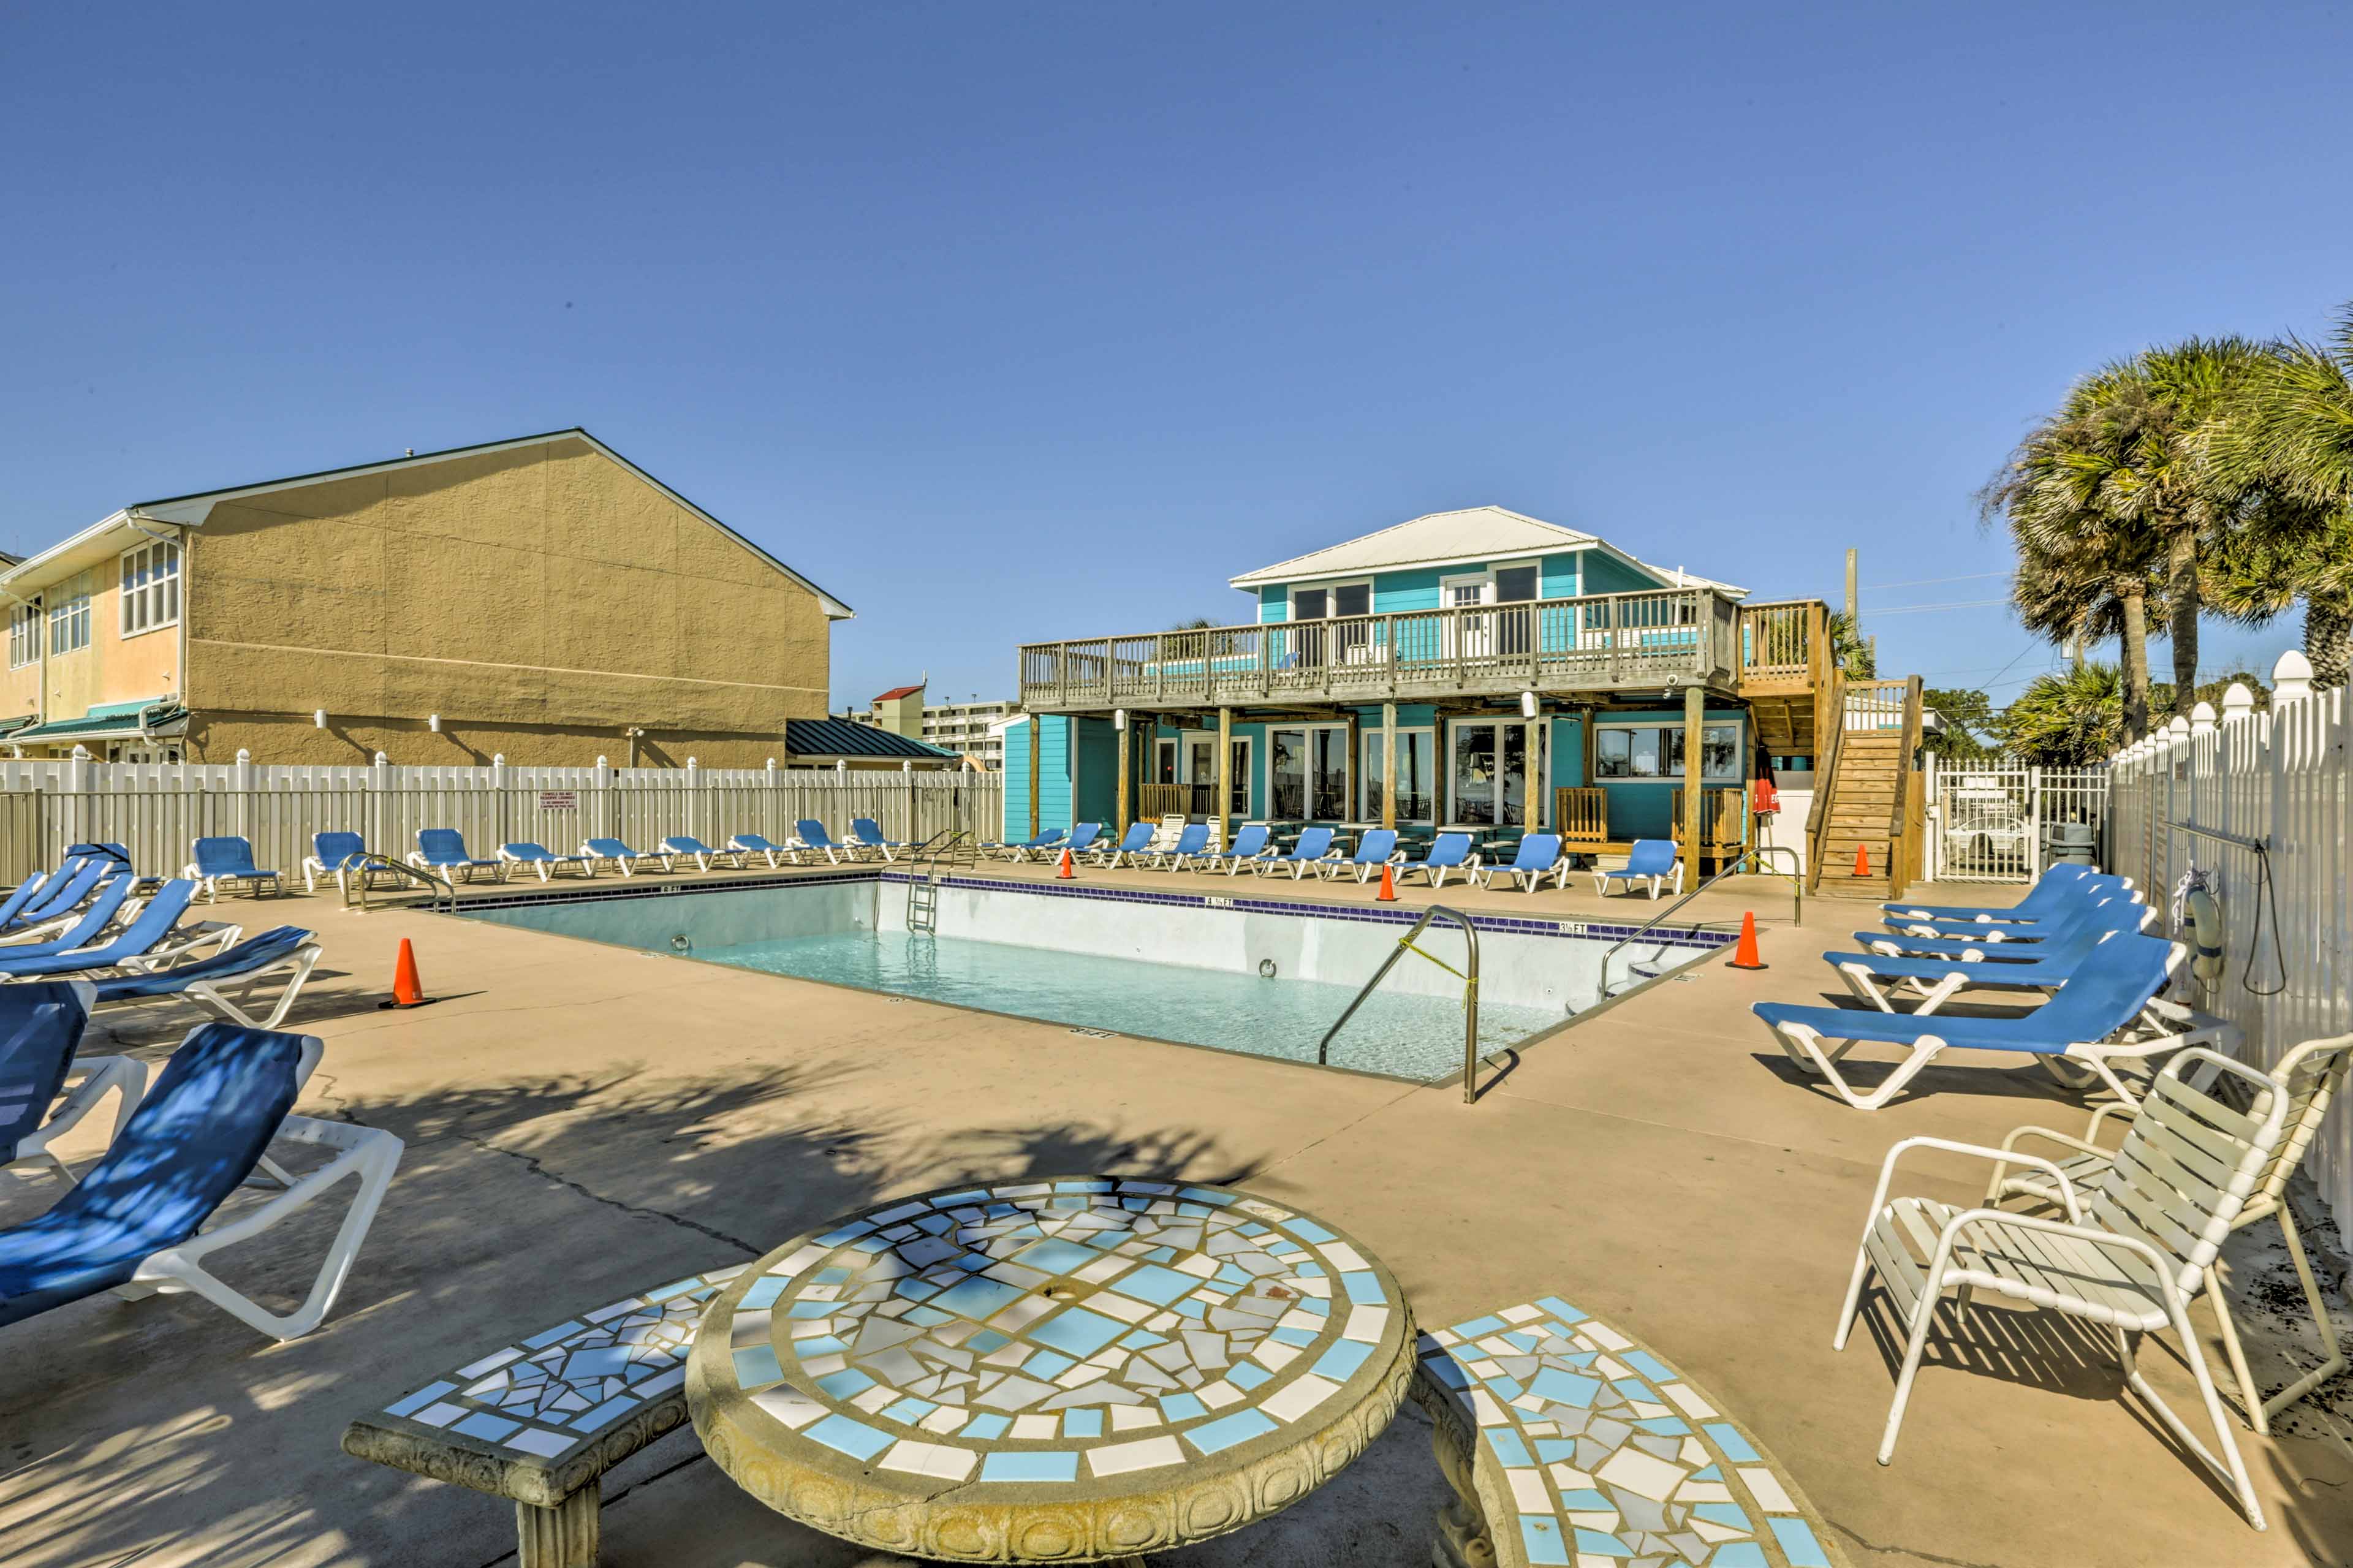 This resort has 11 pools.